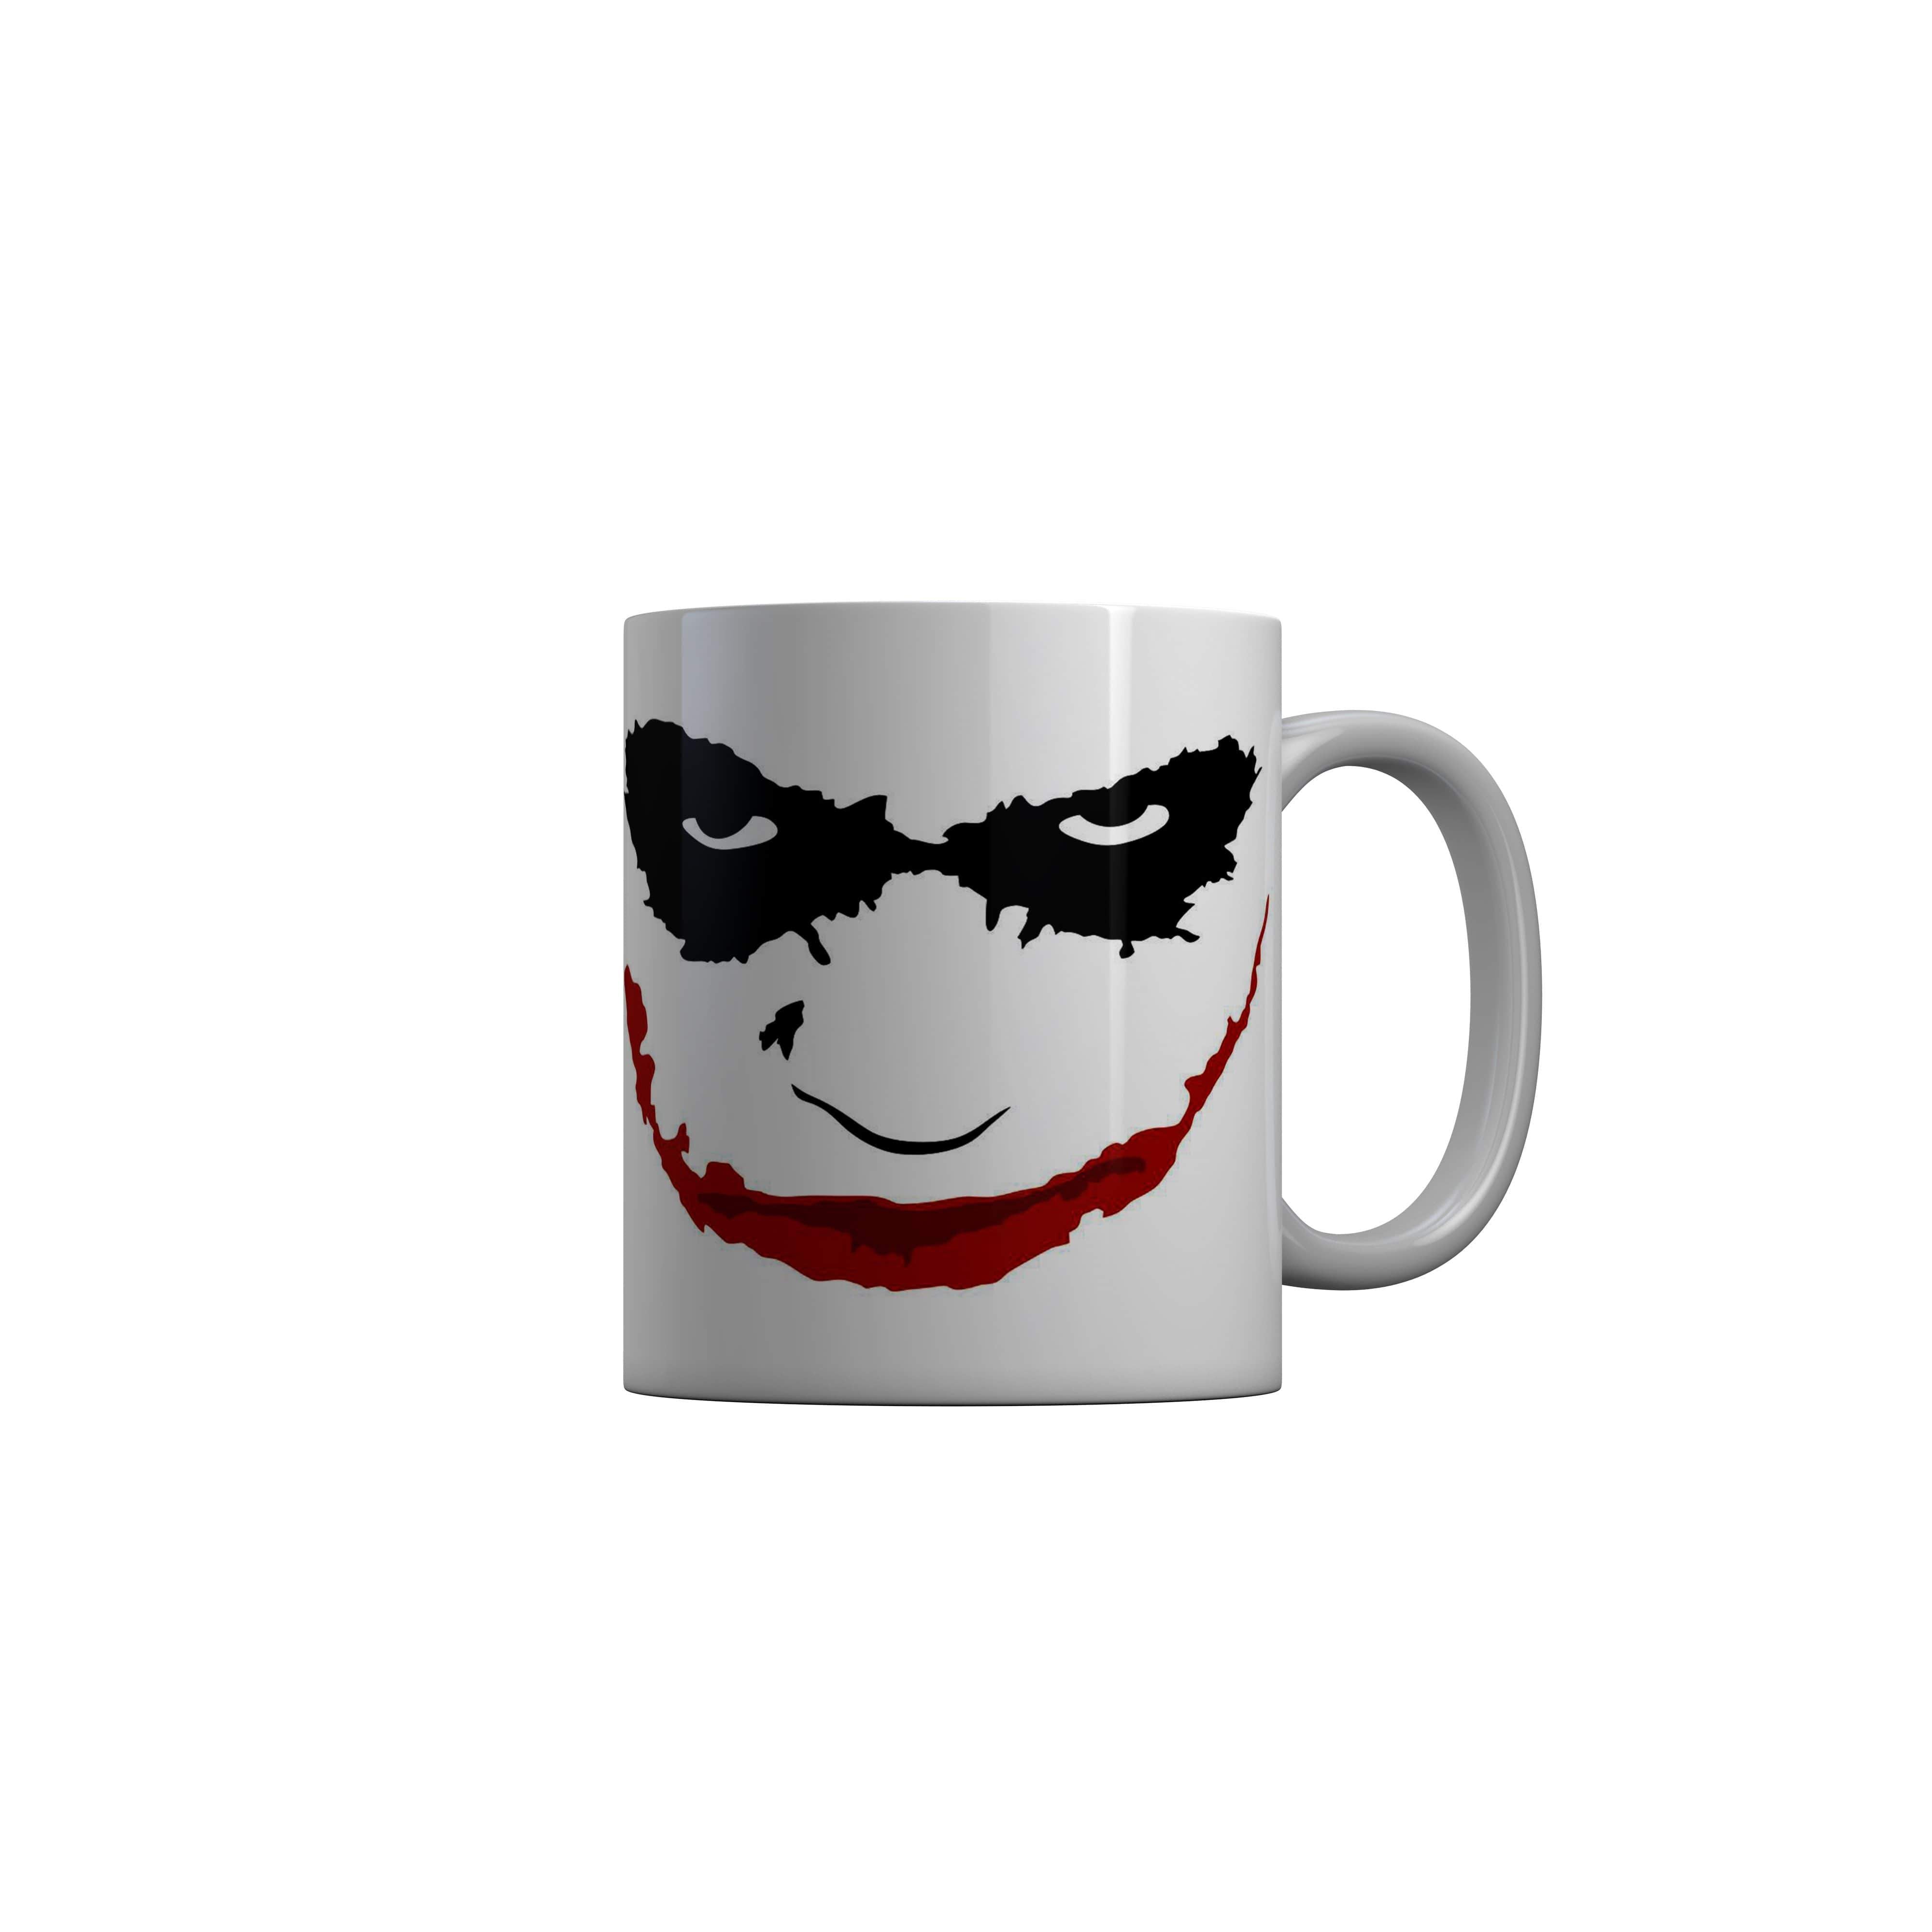 FashionRazor Angry Face White Ceramic Coffee Mug, 350 ml Mug FashionRazor